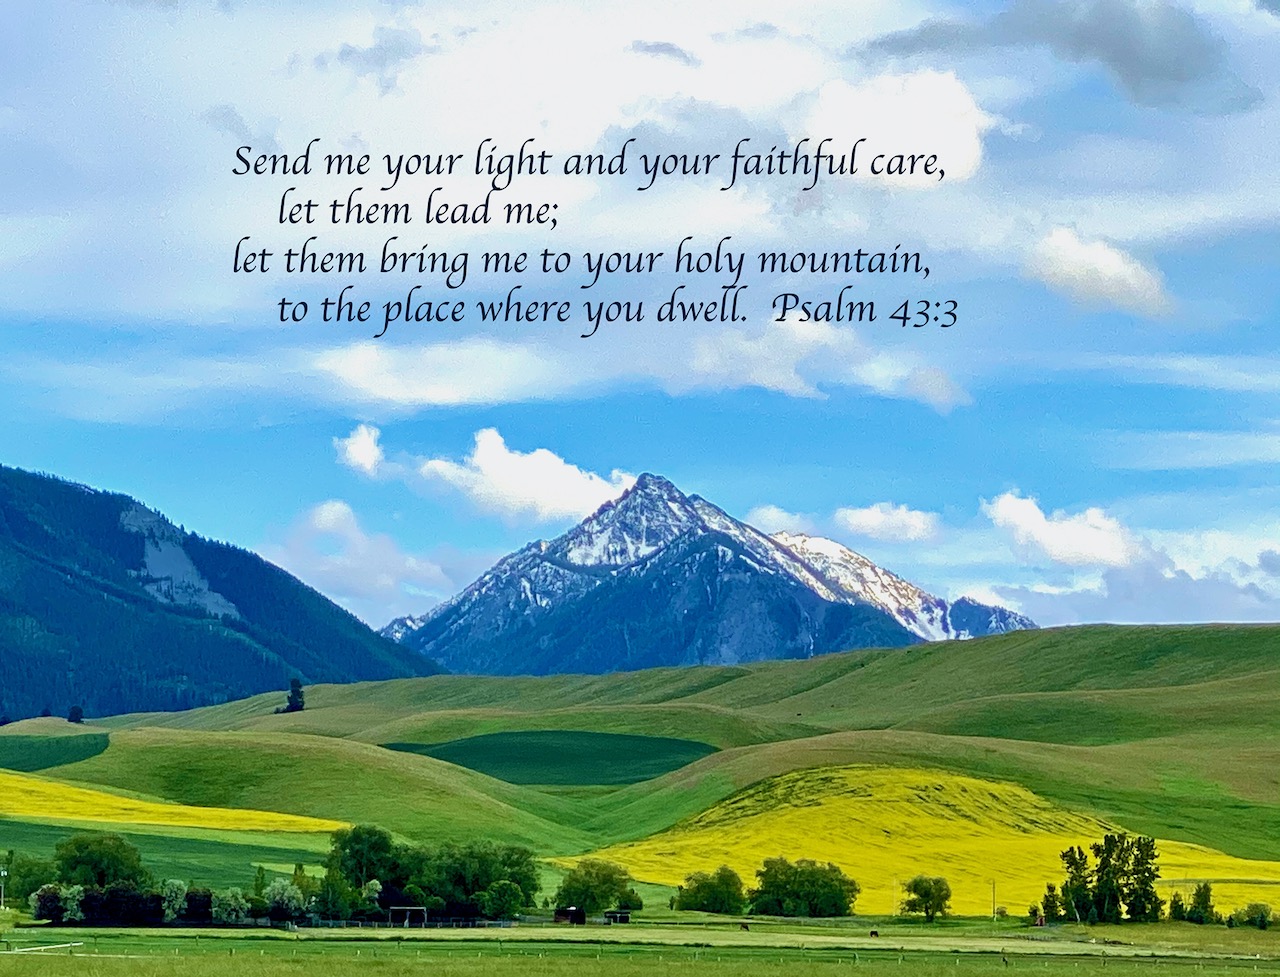 Psalm 43